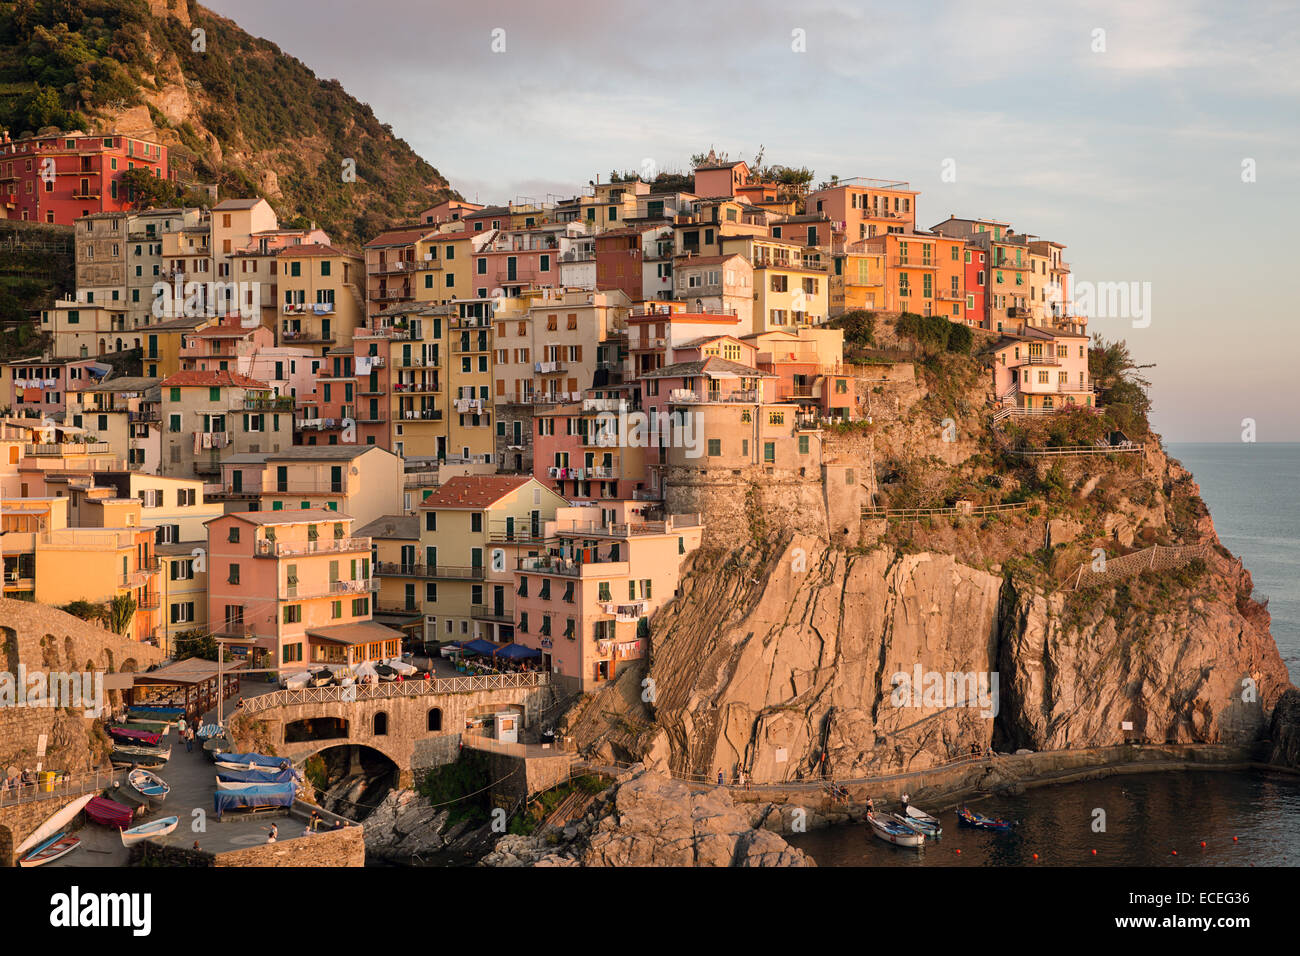 The village of Manarola in Cinque Terre. Italian Riviera. Stock Photo